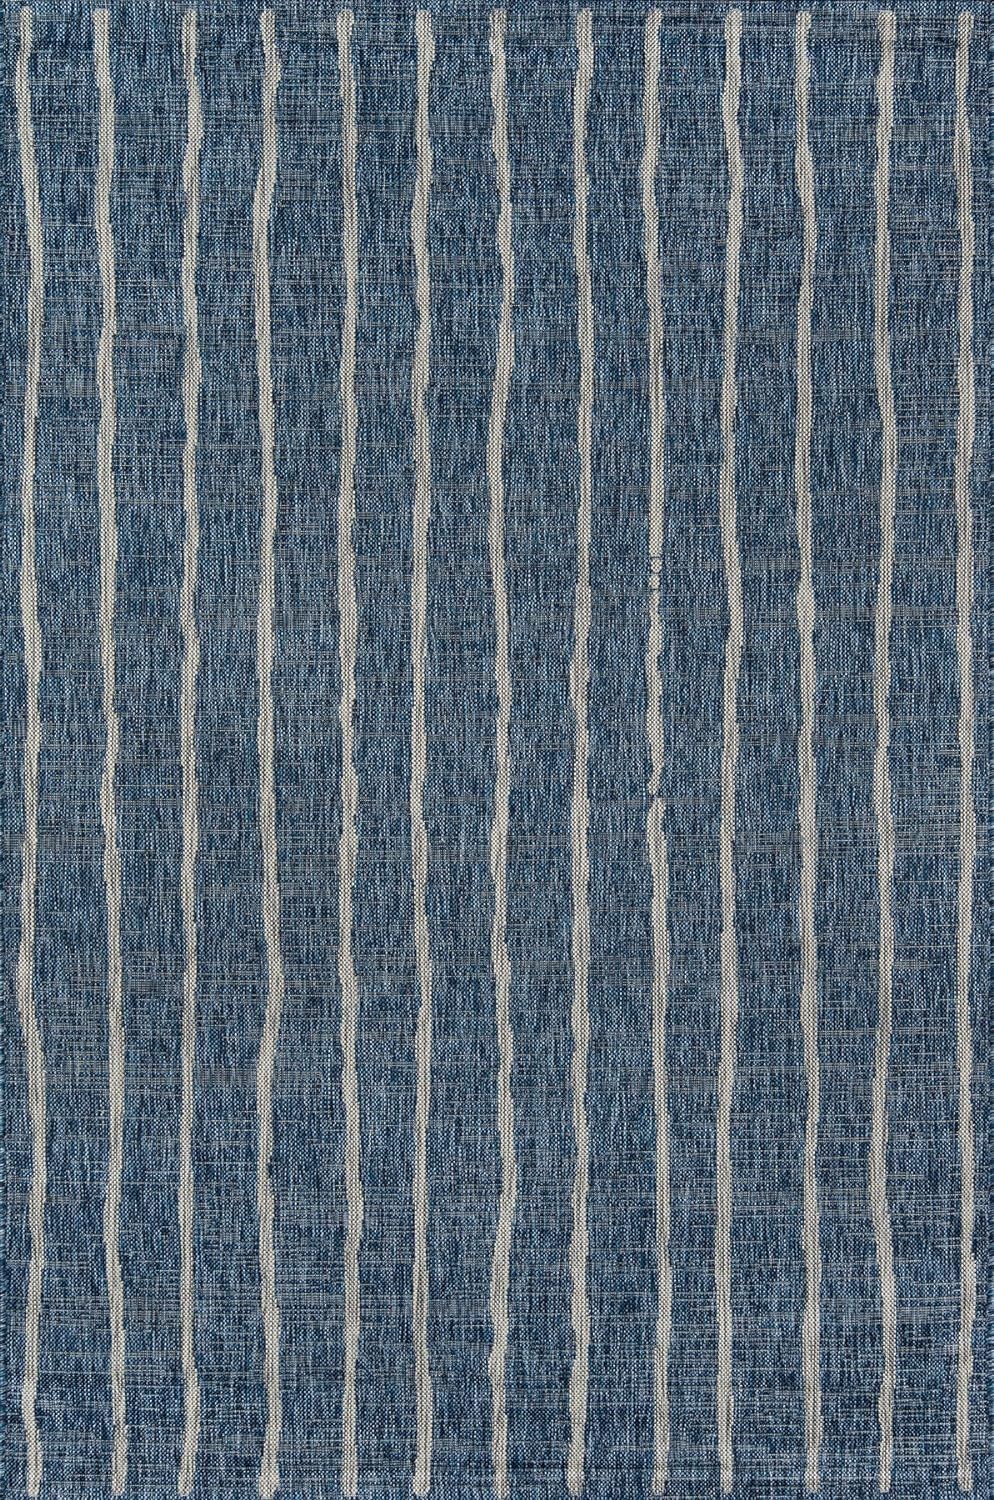 Braided Blue Stripe Synthetic Rectangular Rug 7'10" x 10'10"